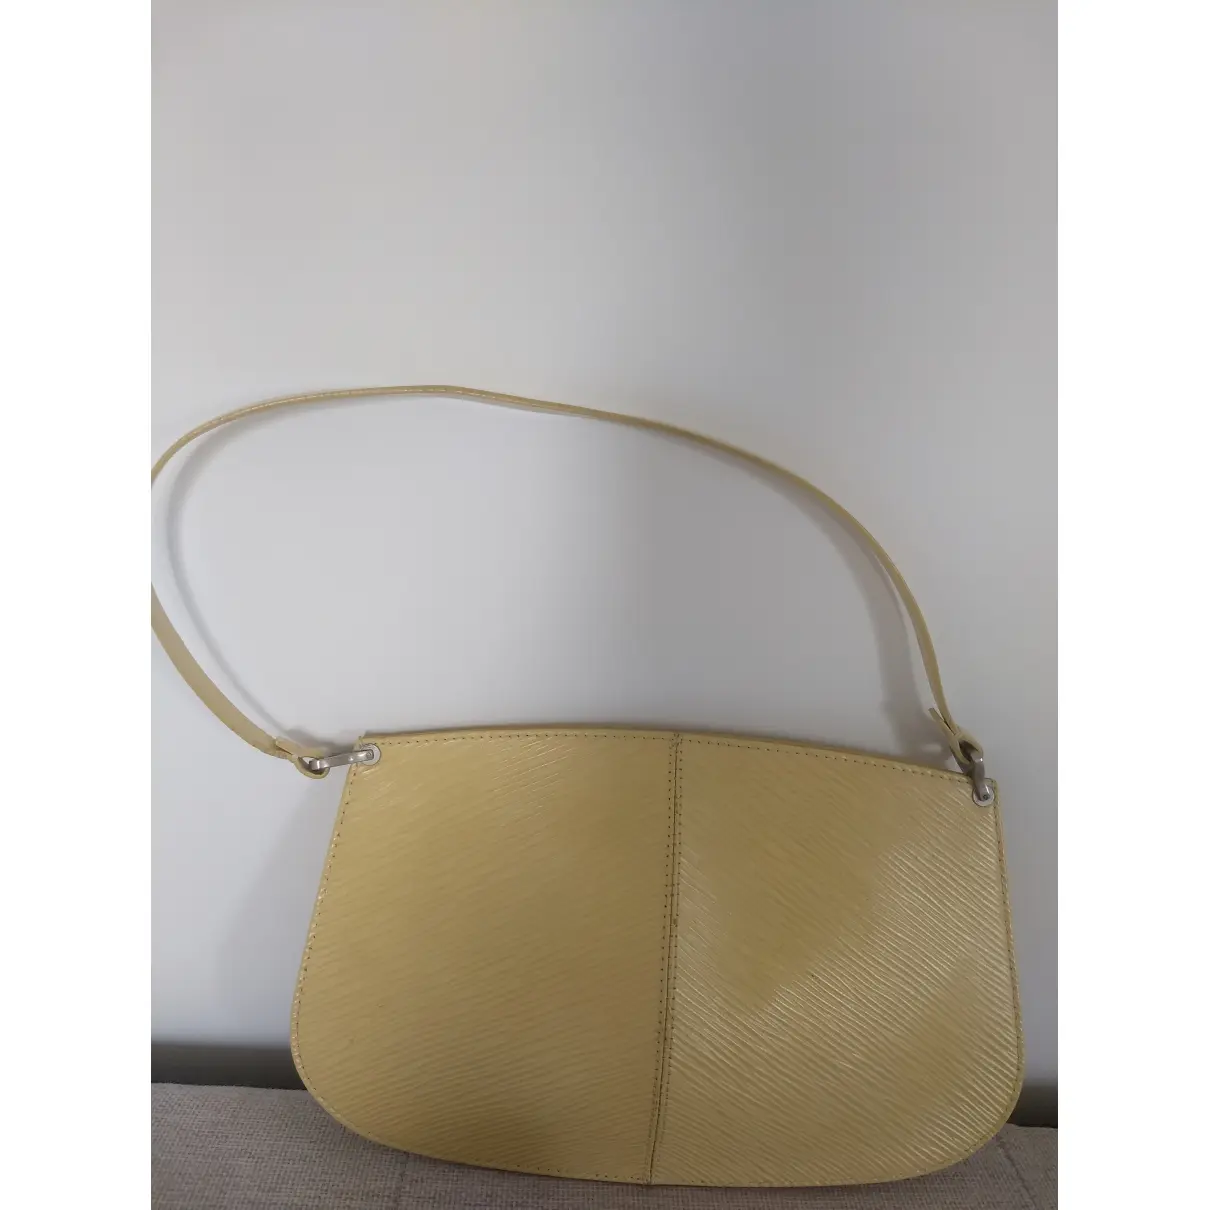 Buy Louis Vuitton Luna leather handbag online - Vintage